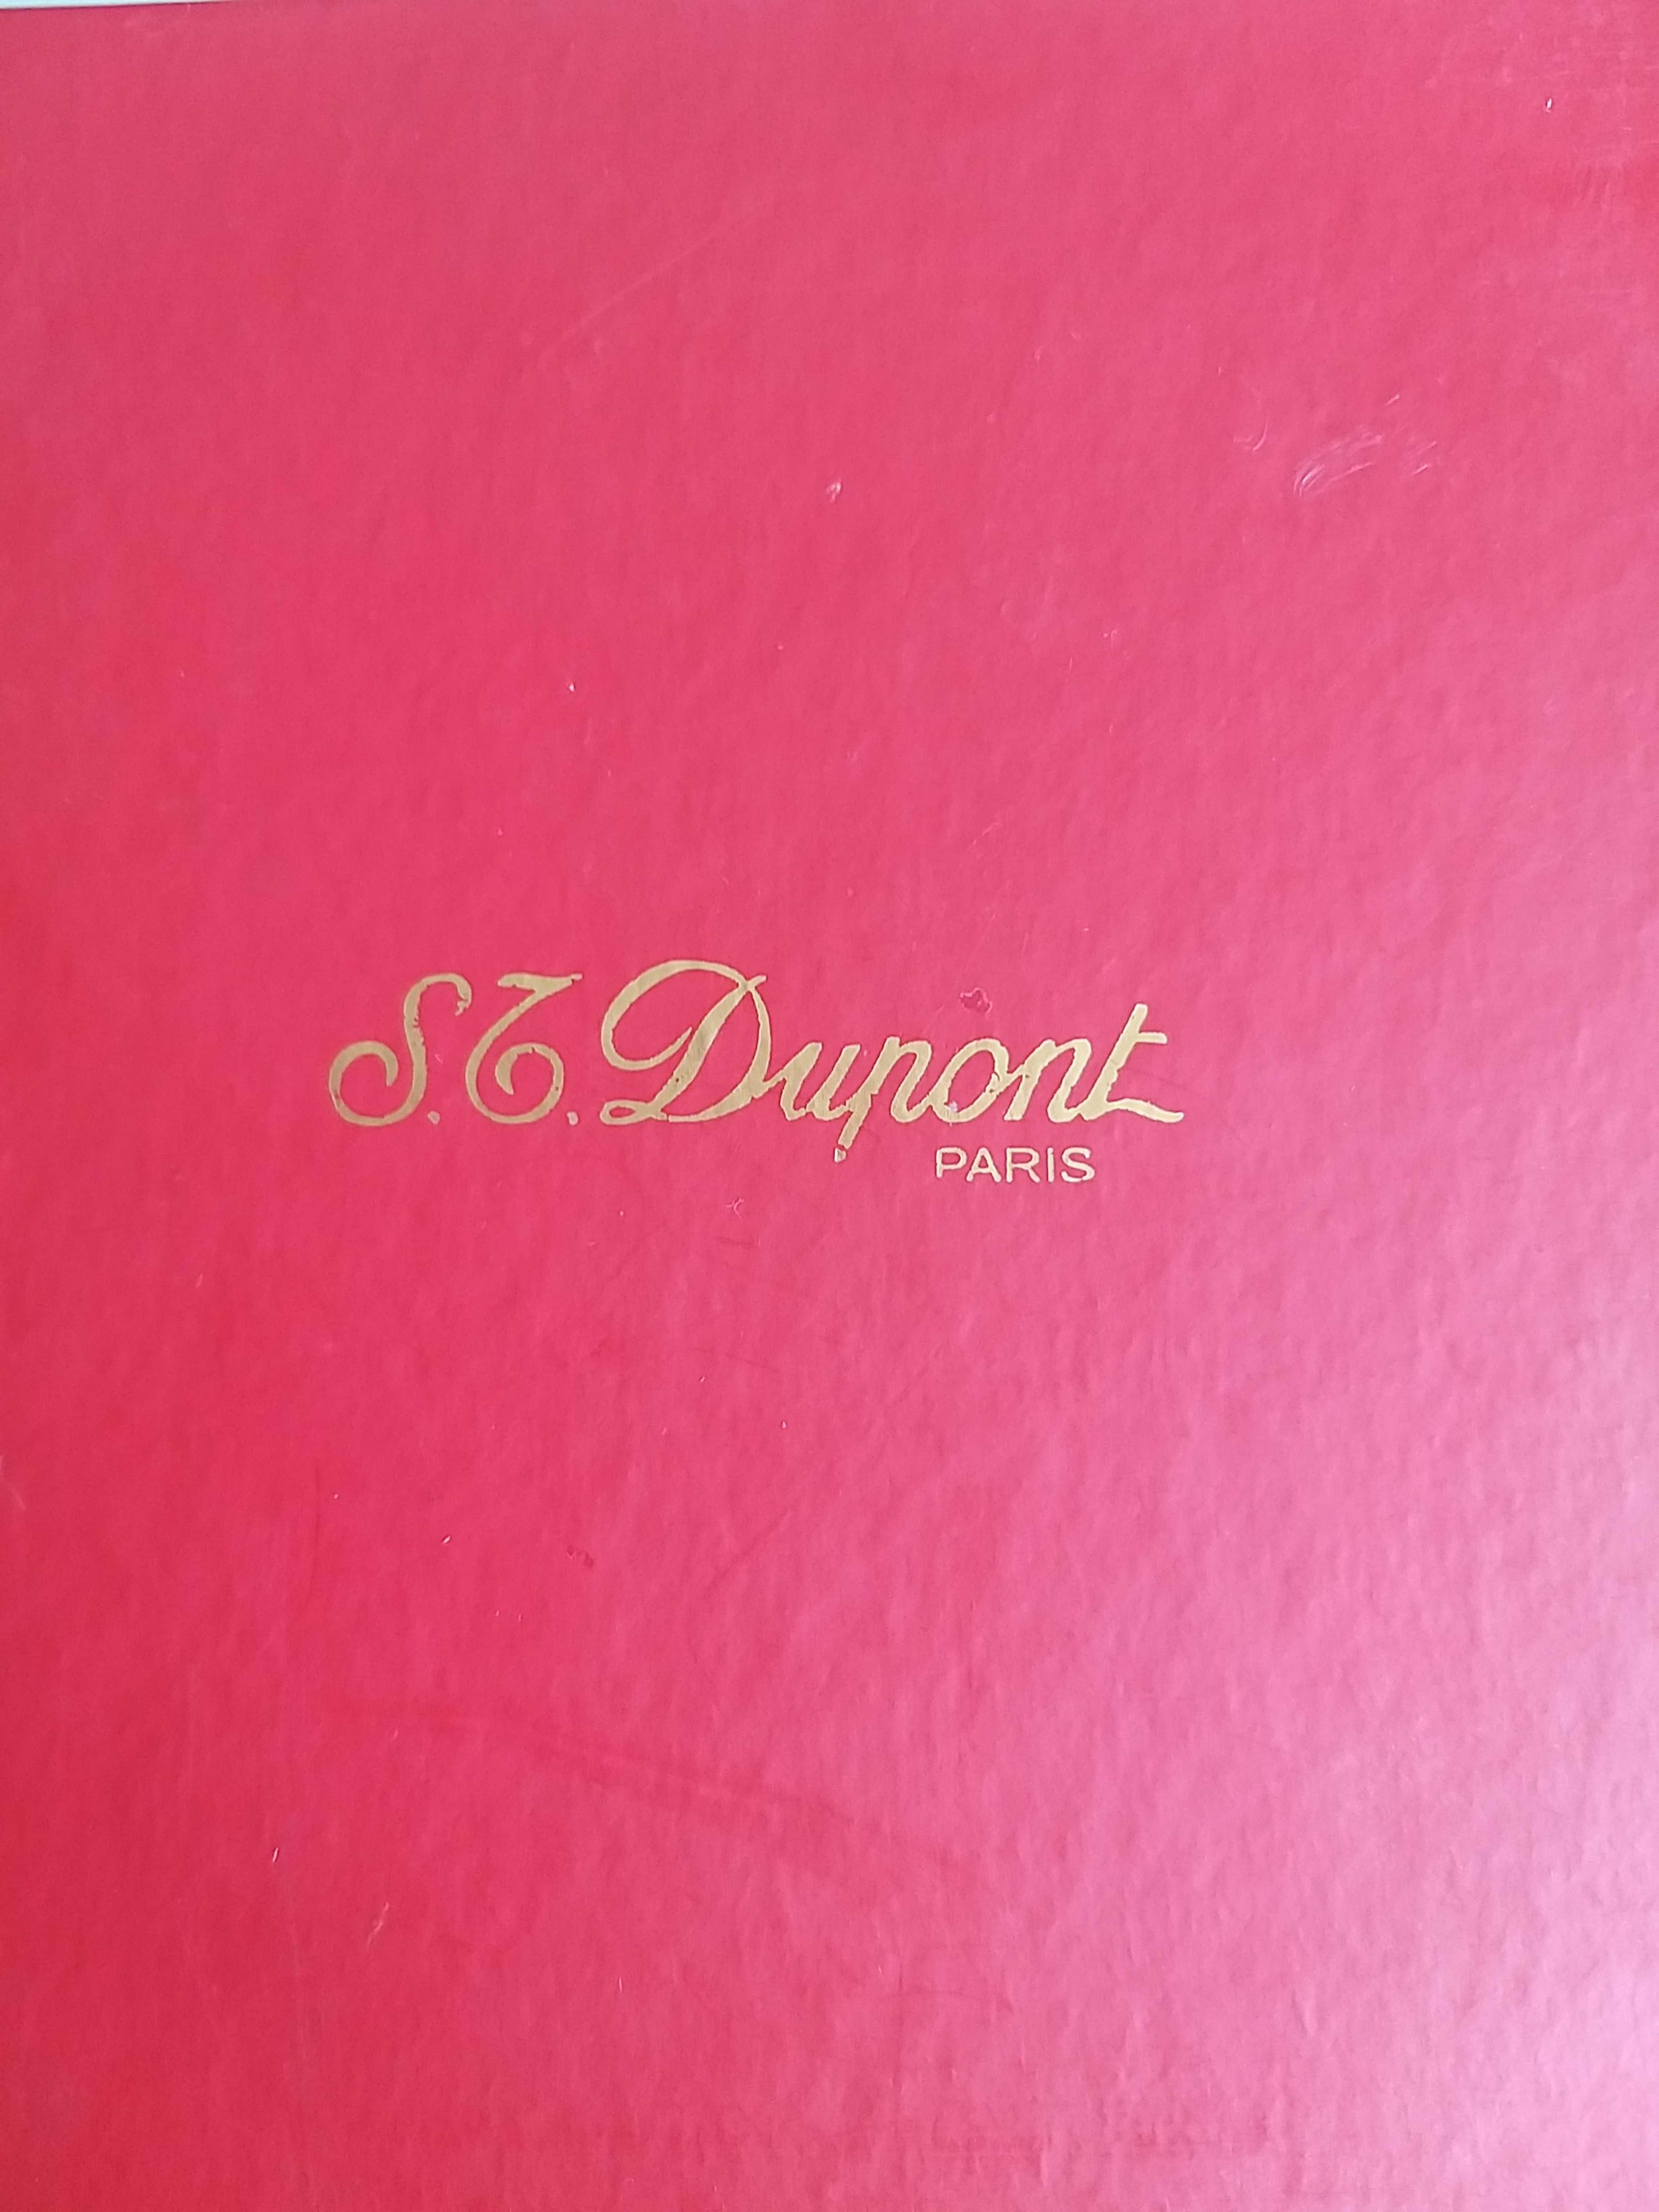 Мужской ремень S.T. Dupont  24 карата паладий.